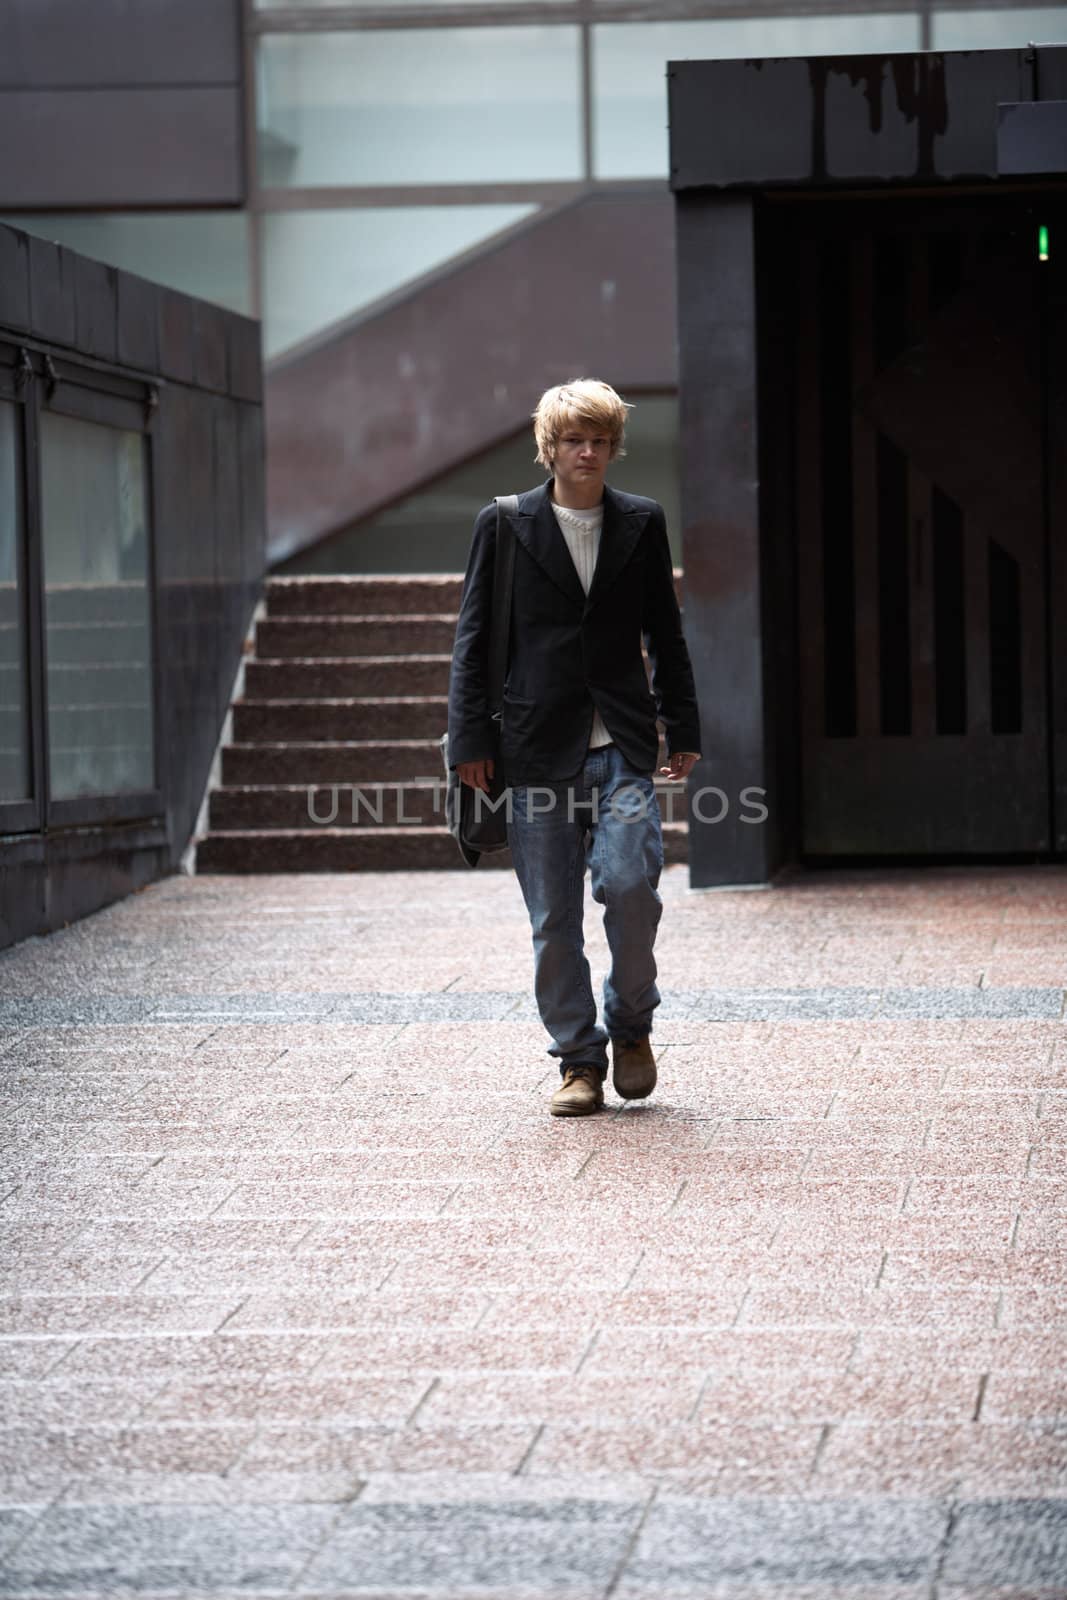 Teenage boy walking at entrance of building